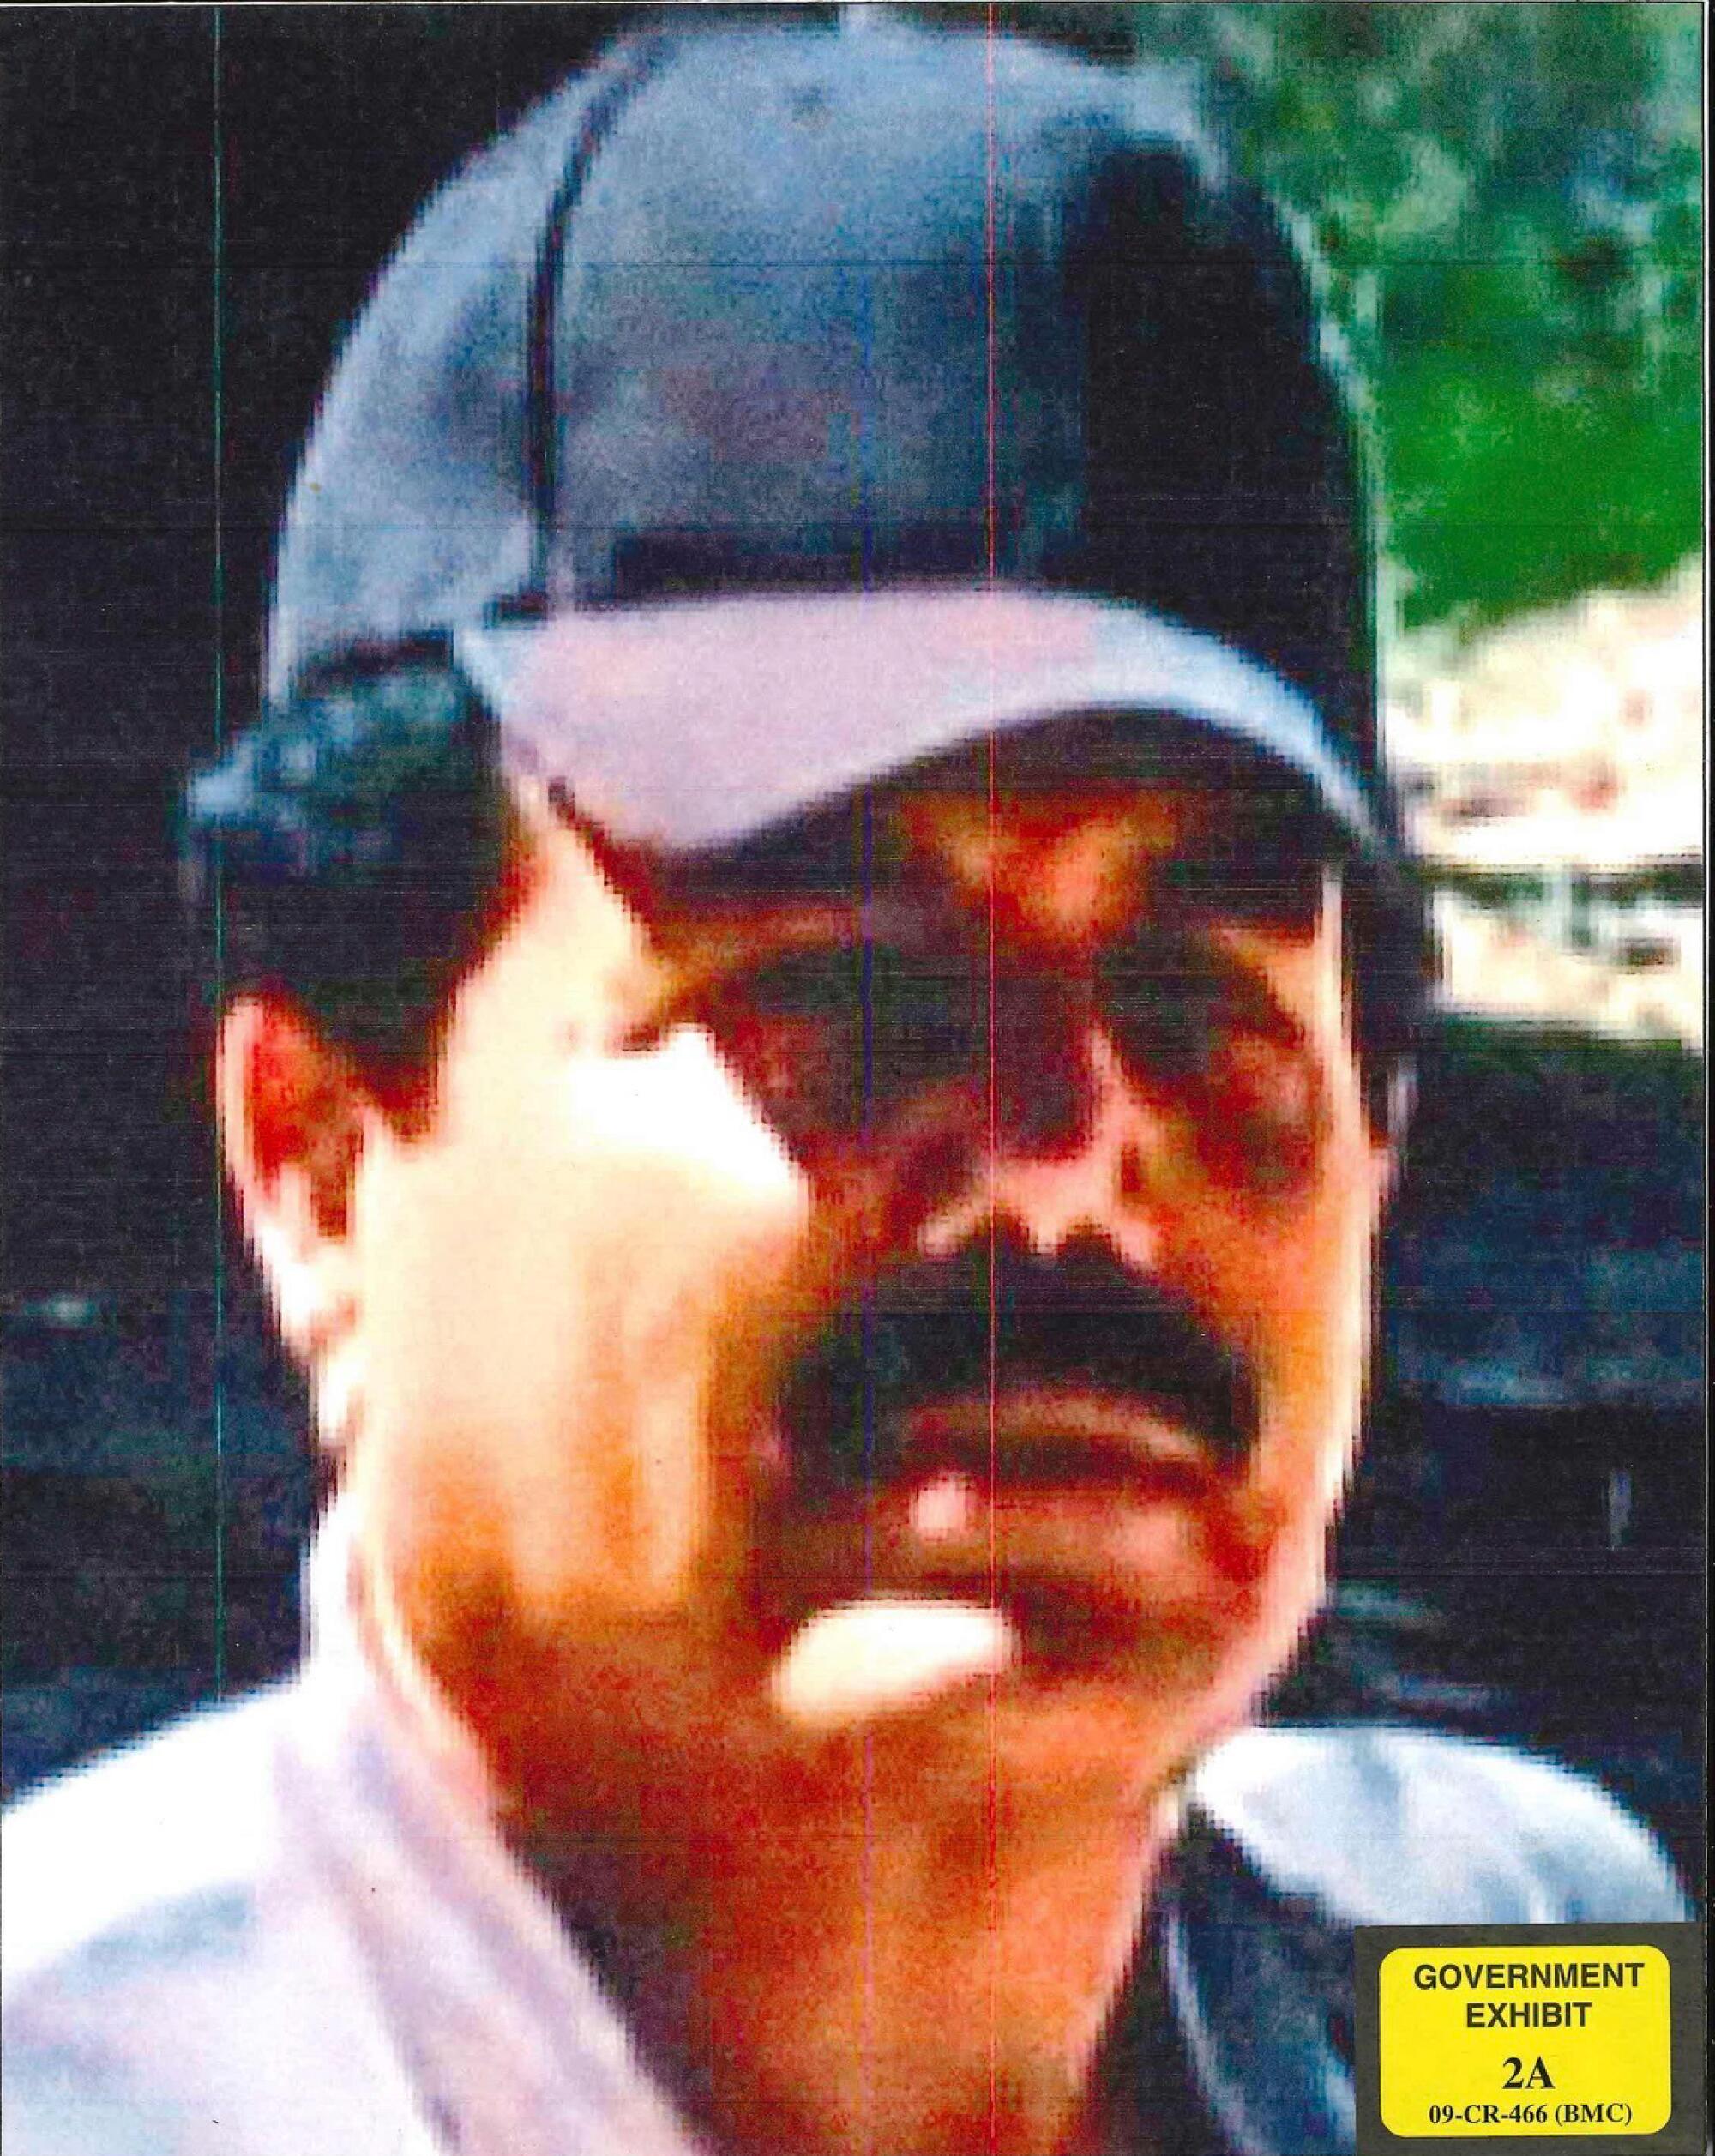 A mugshot of Ismael "El Mayo" Zambada, 76, wearing a baseball cap